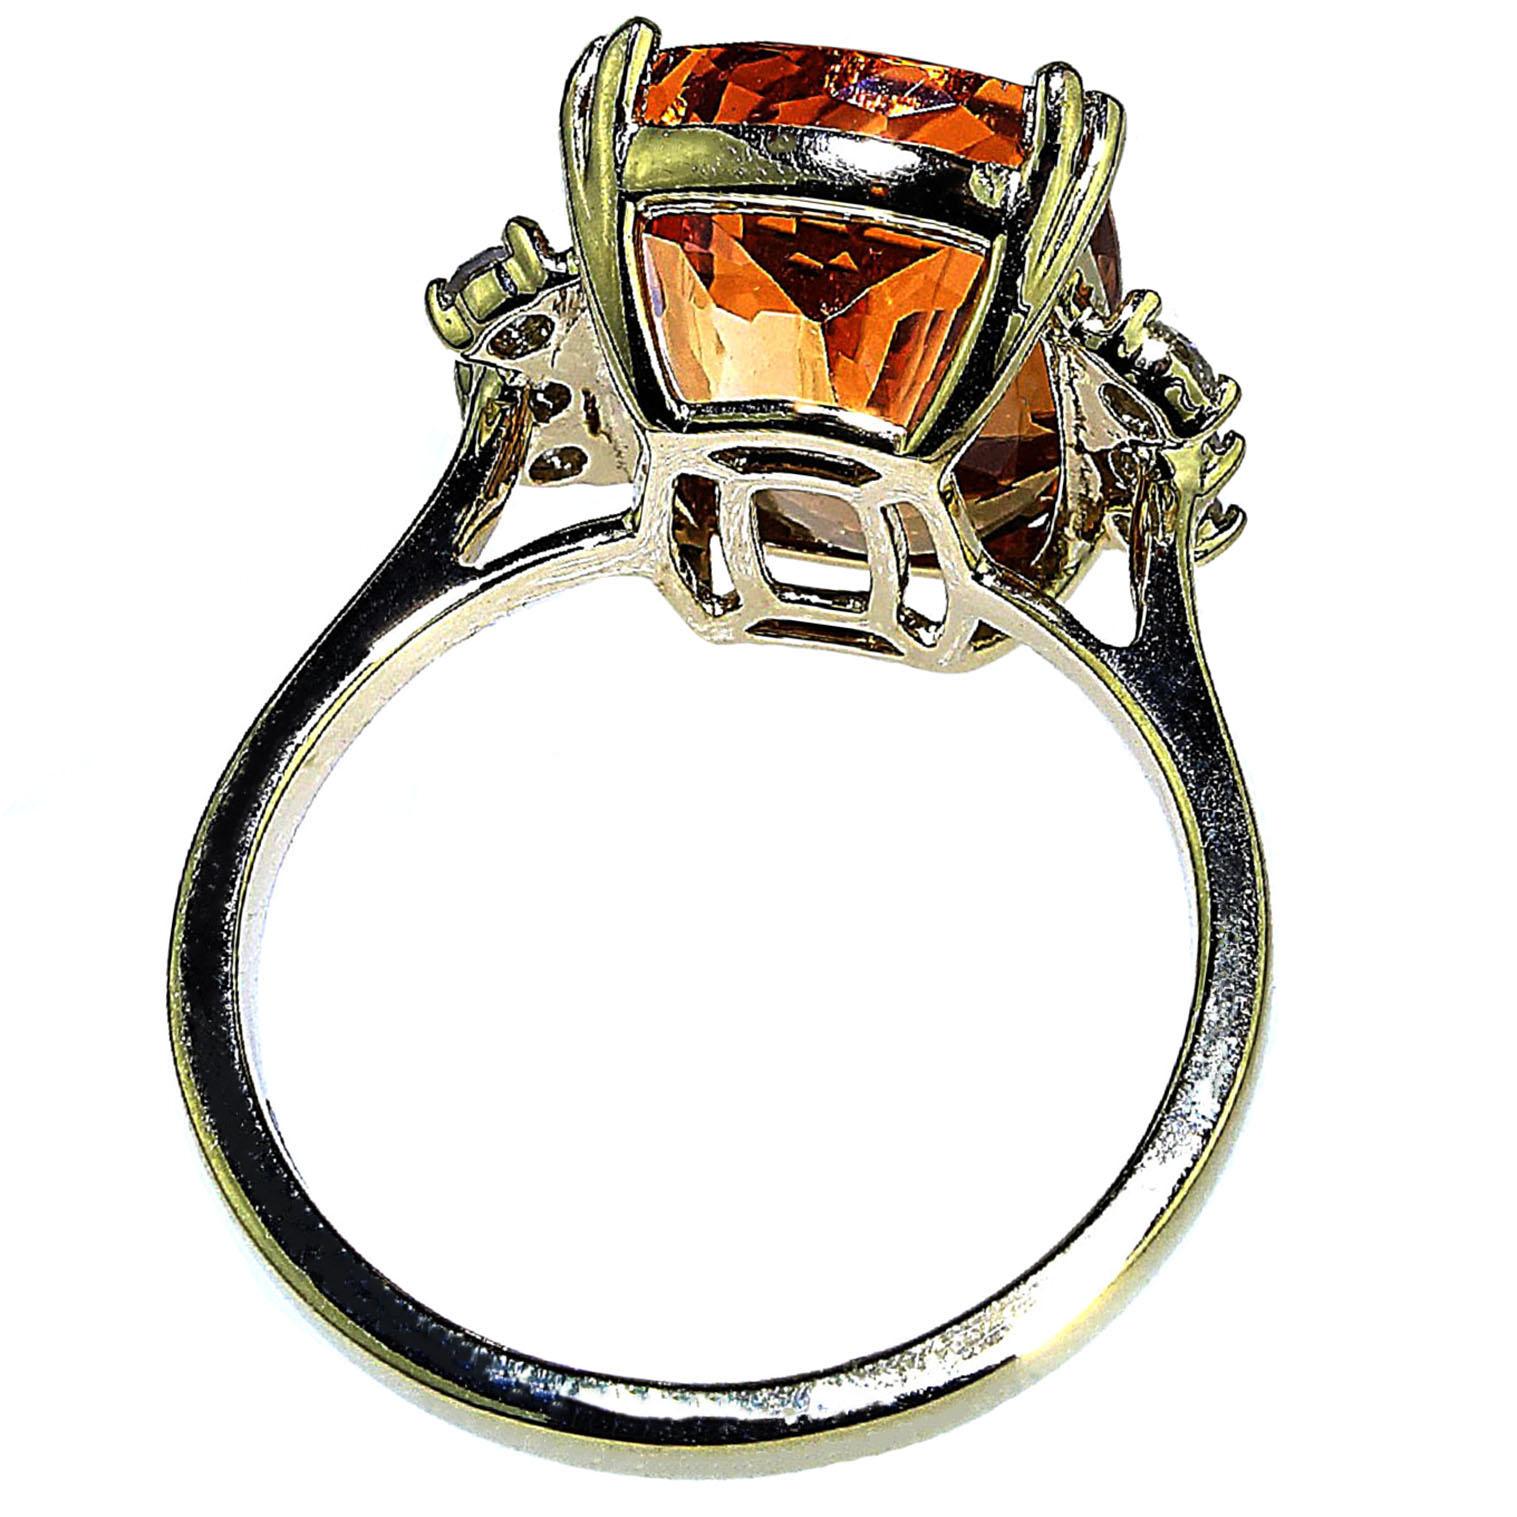 Women's Peachy/Orange Imperial Topaz and Diamond Cocktail Ring